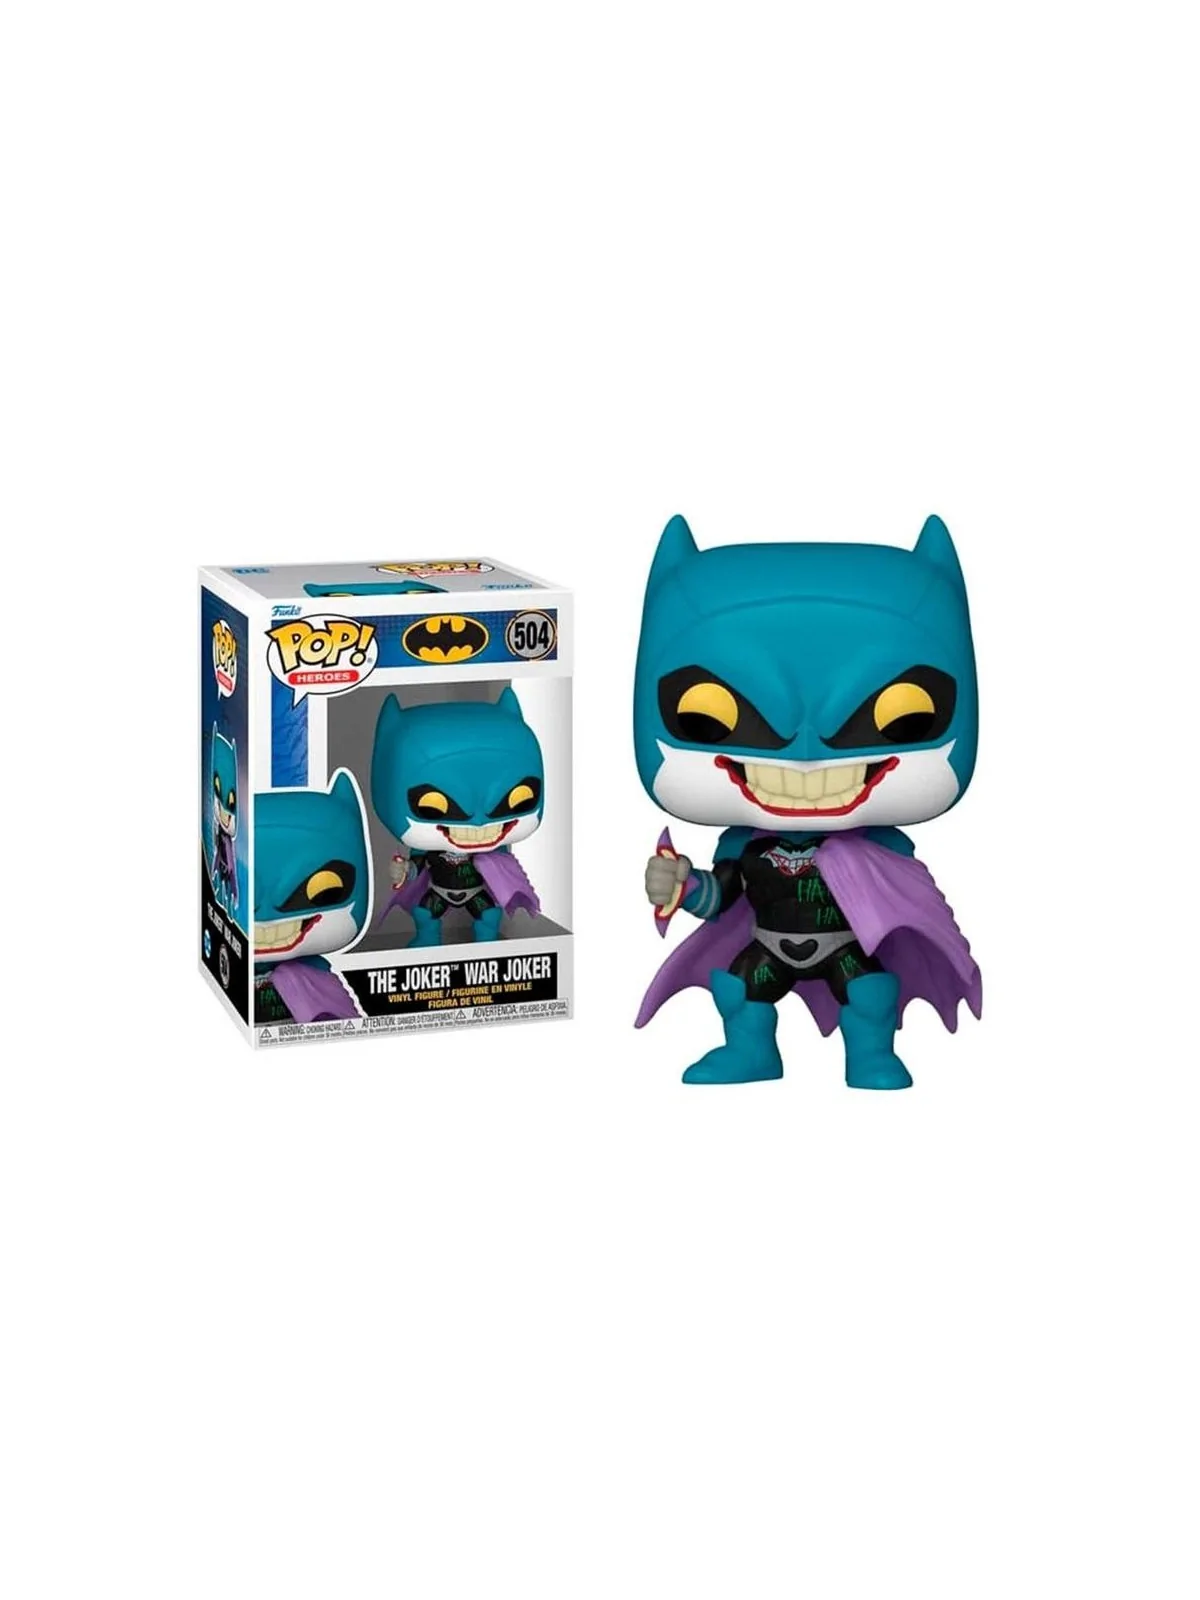 Comprar Funko POP! Batman: The Joker War Joker (504) barato al mejor p